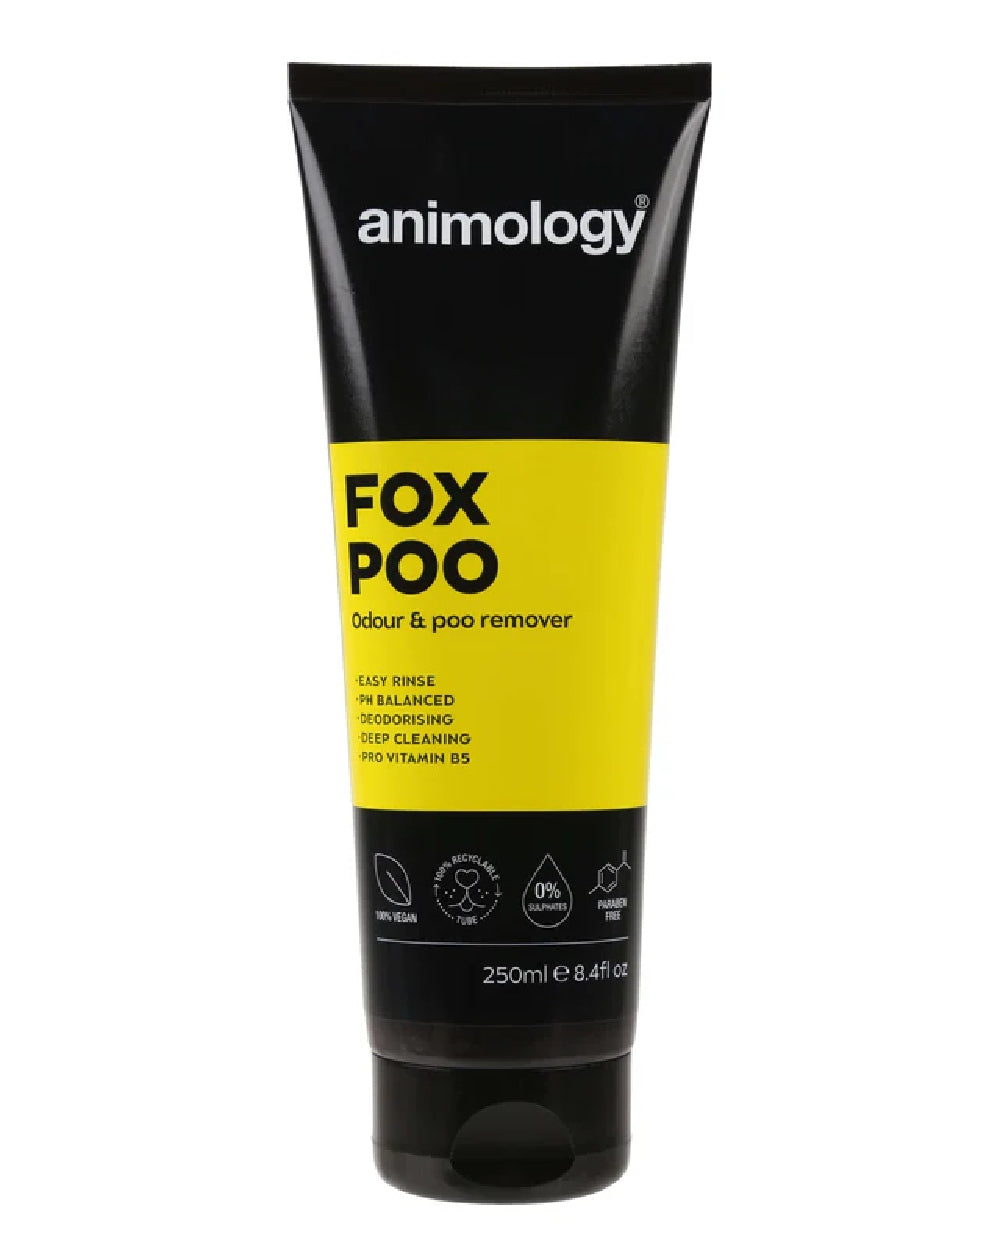 Animology Shampoo Fox Poo 250ml on white background